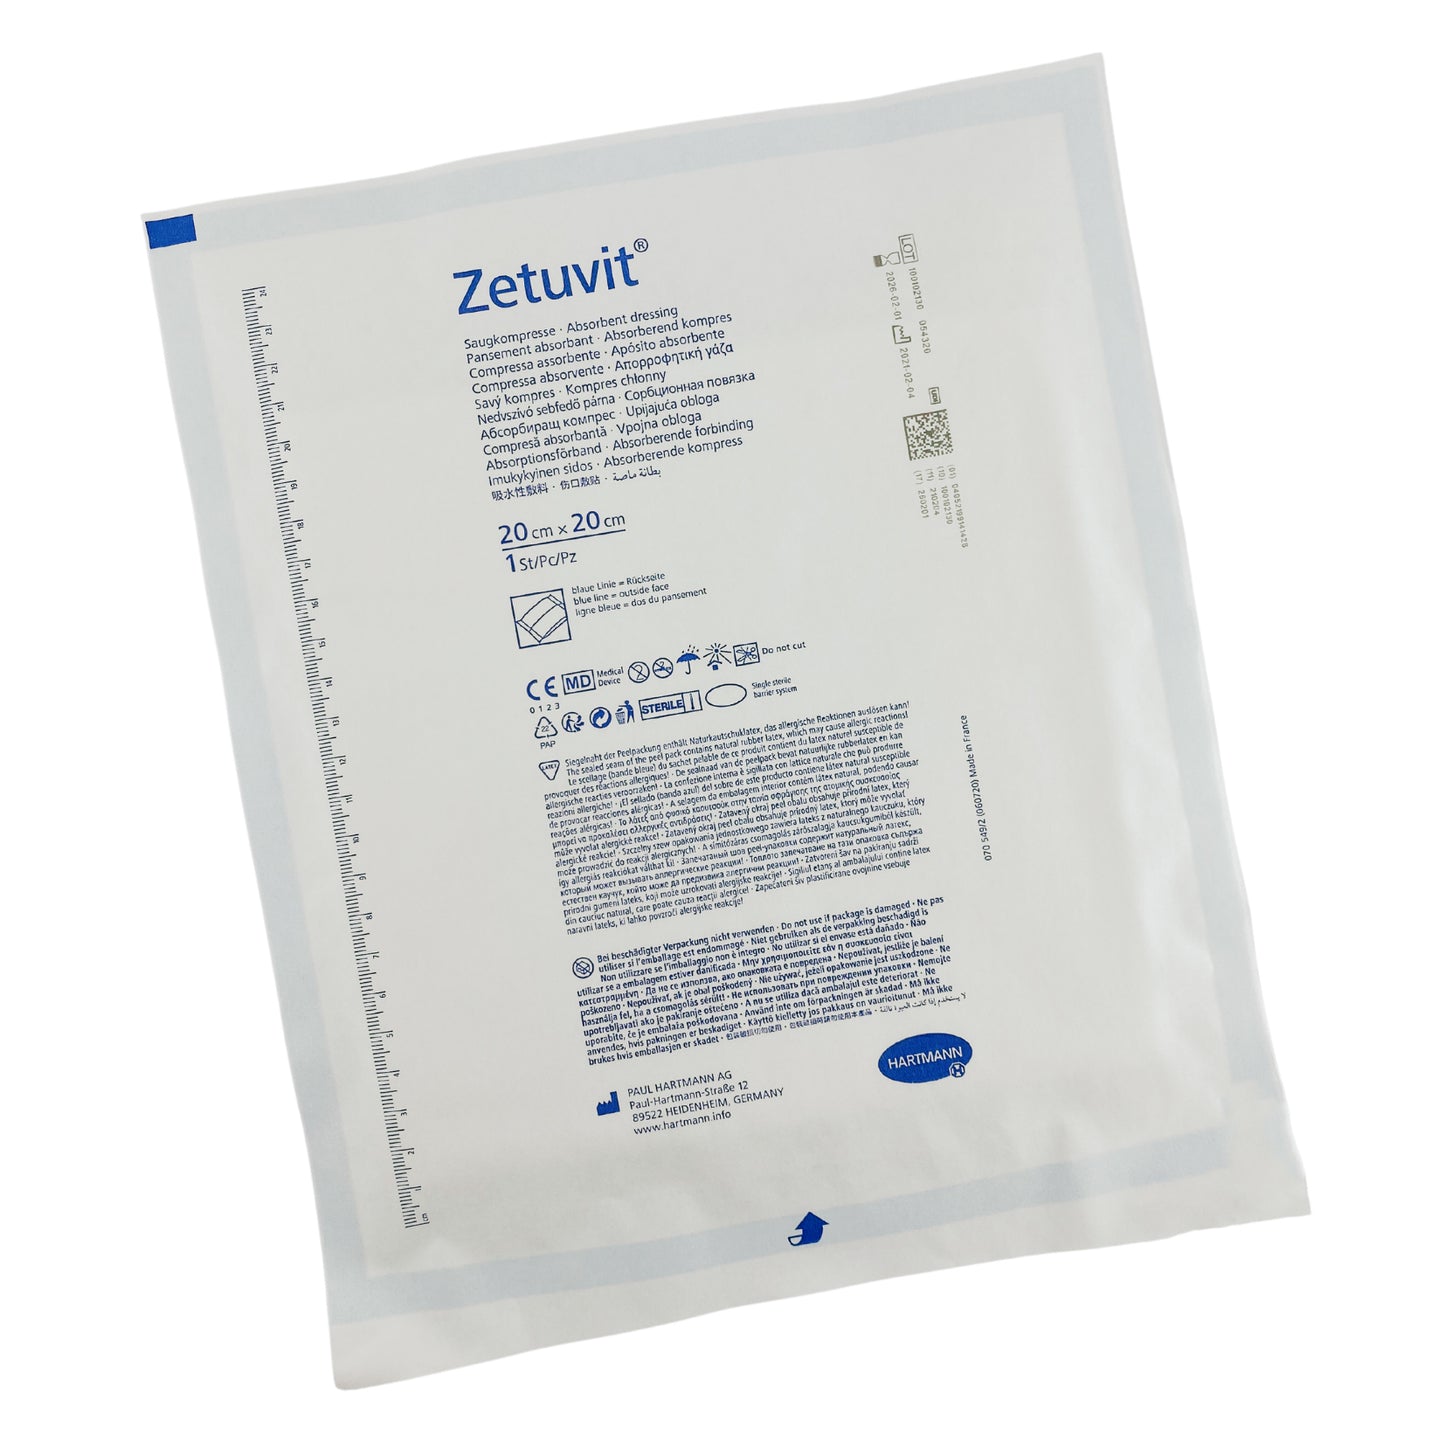 Zetuvit Wound Dressing 20cm x 20cm Box (15)